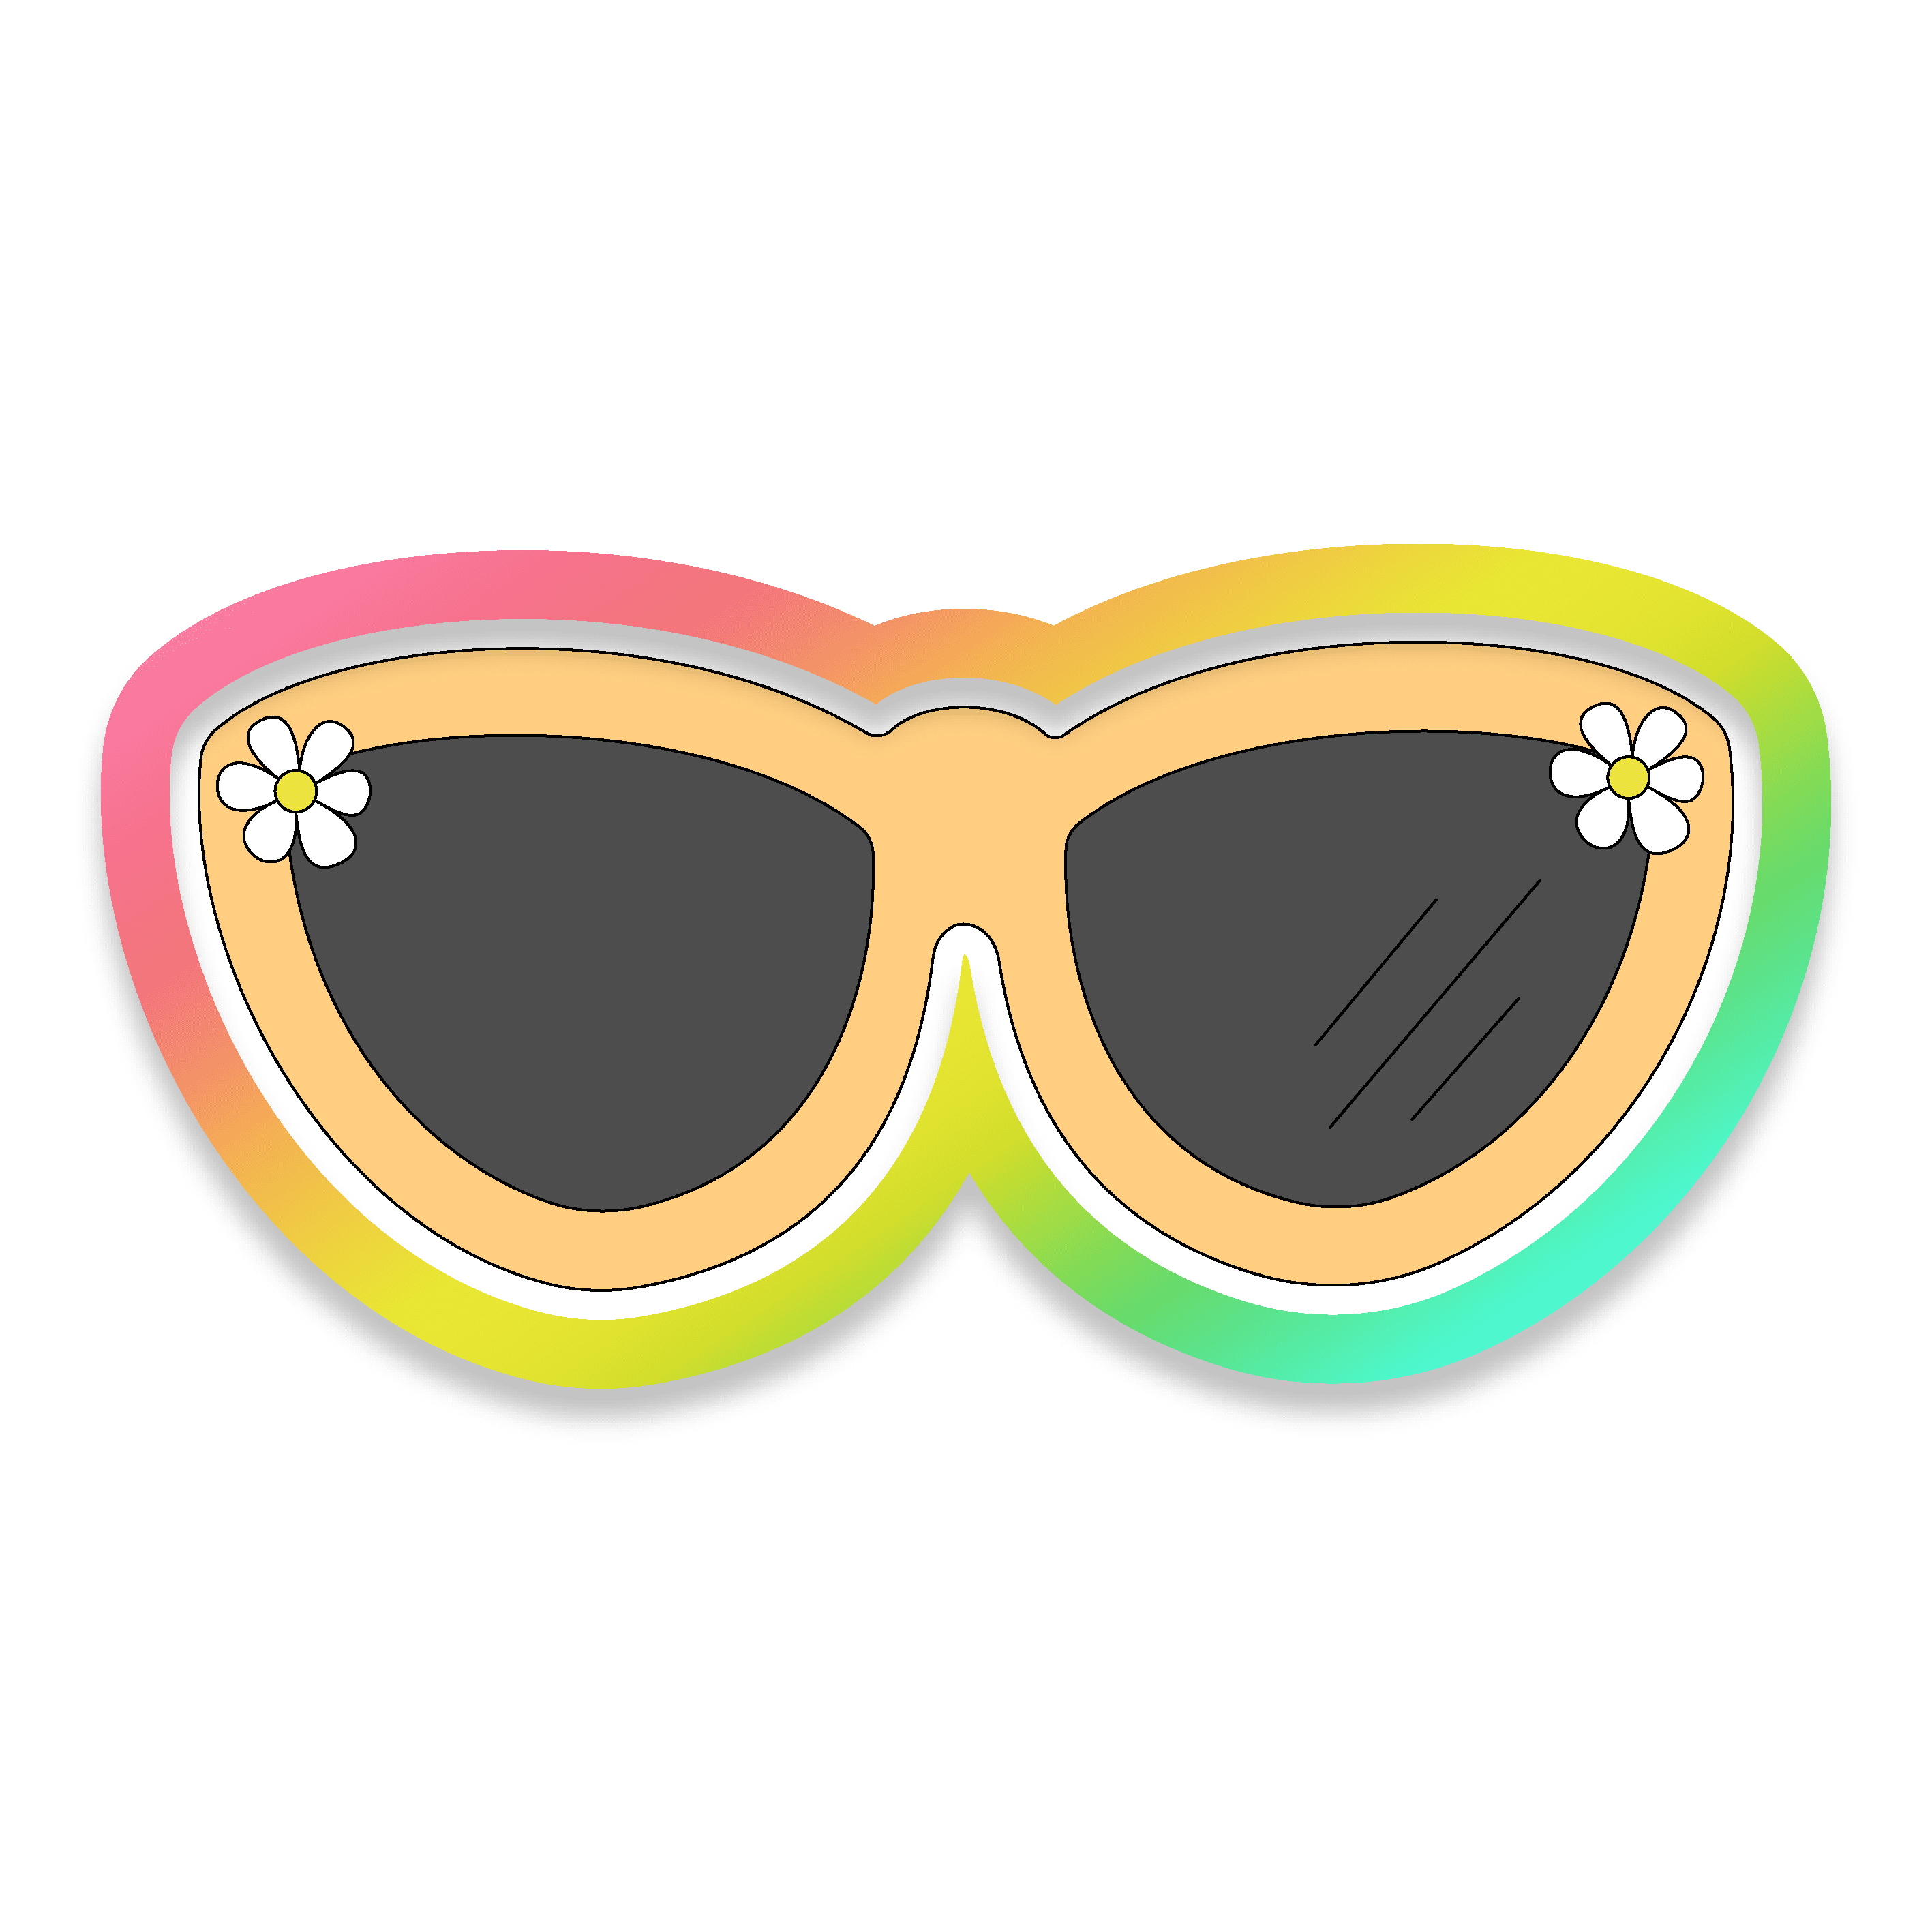 Retro Sunglasses Cookie Cutter 3D Download